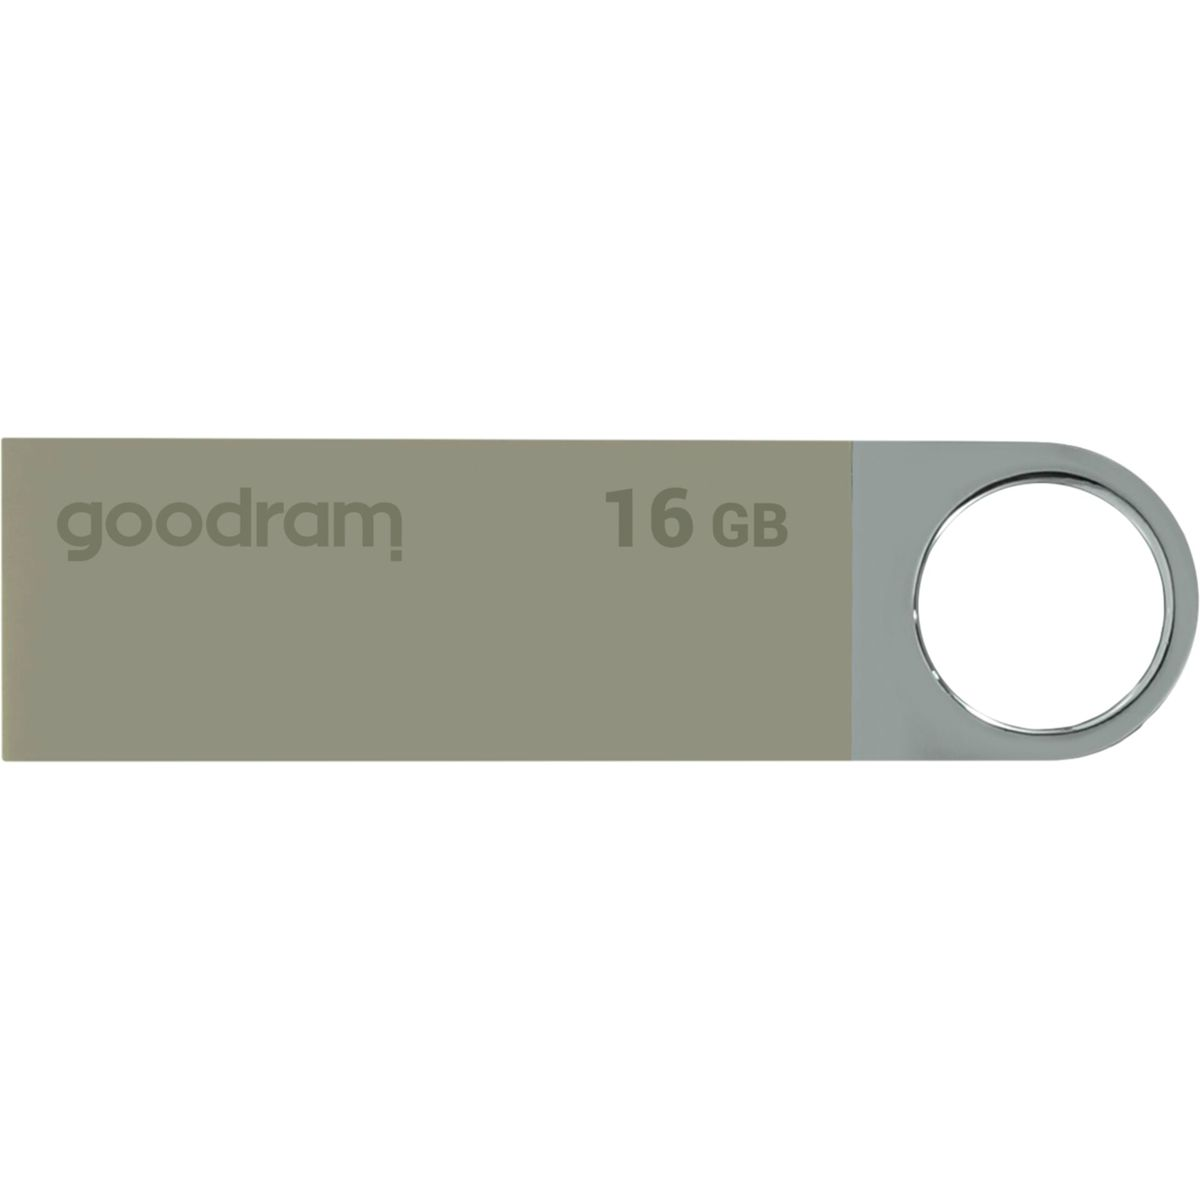 GB) USB Silver USB 2.0 UUN2 16GB GOODRAM Stick (silber, 16